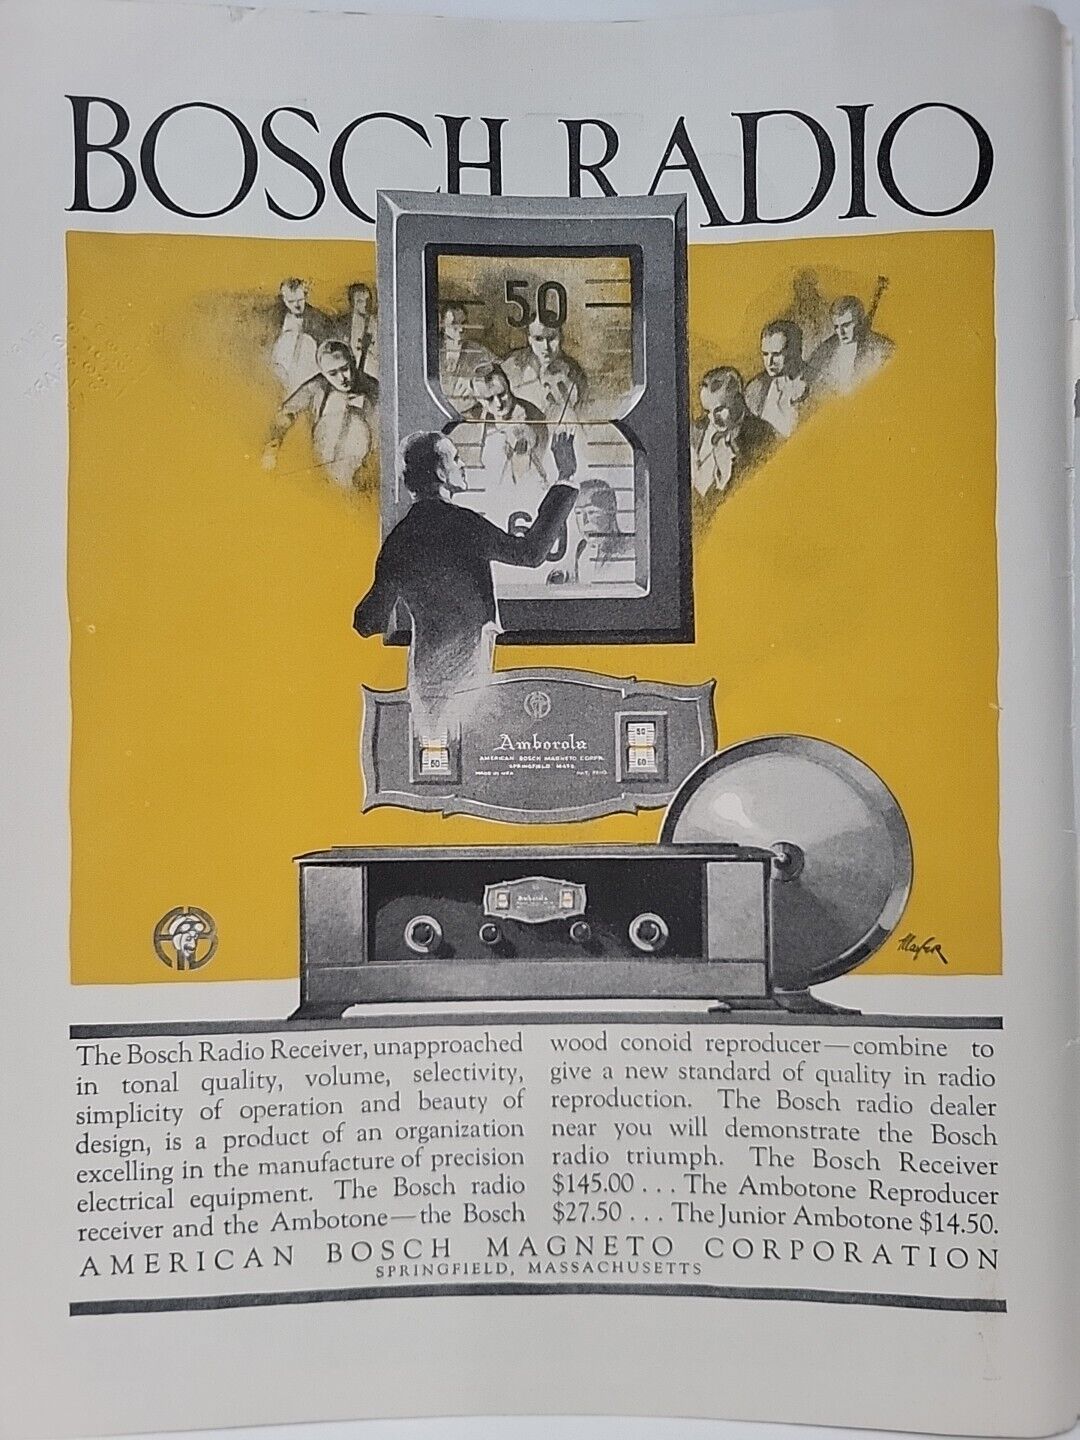 Bosch Radio 1925 Print Ad Colliers American Bosch Magneto Corporation Conductor